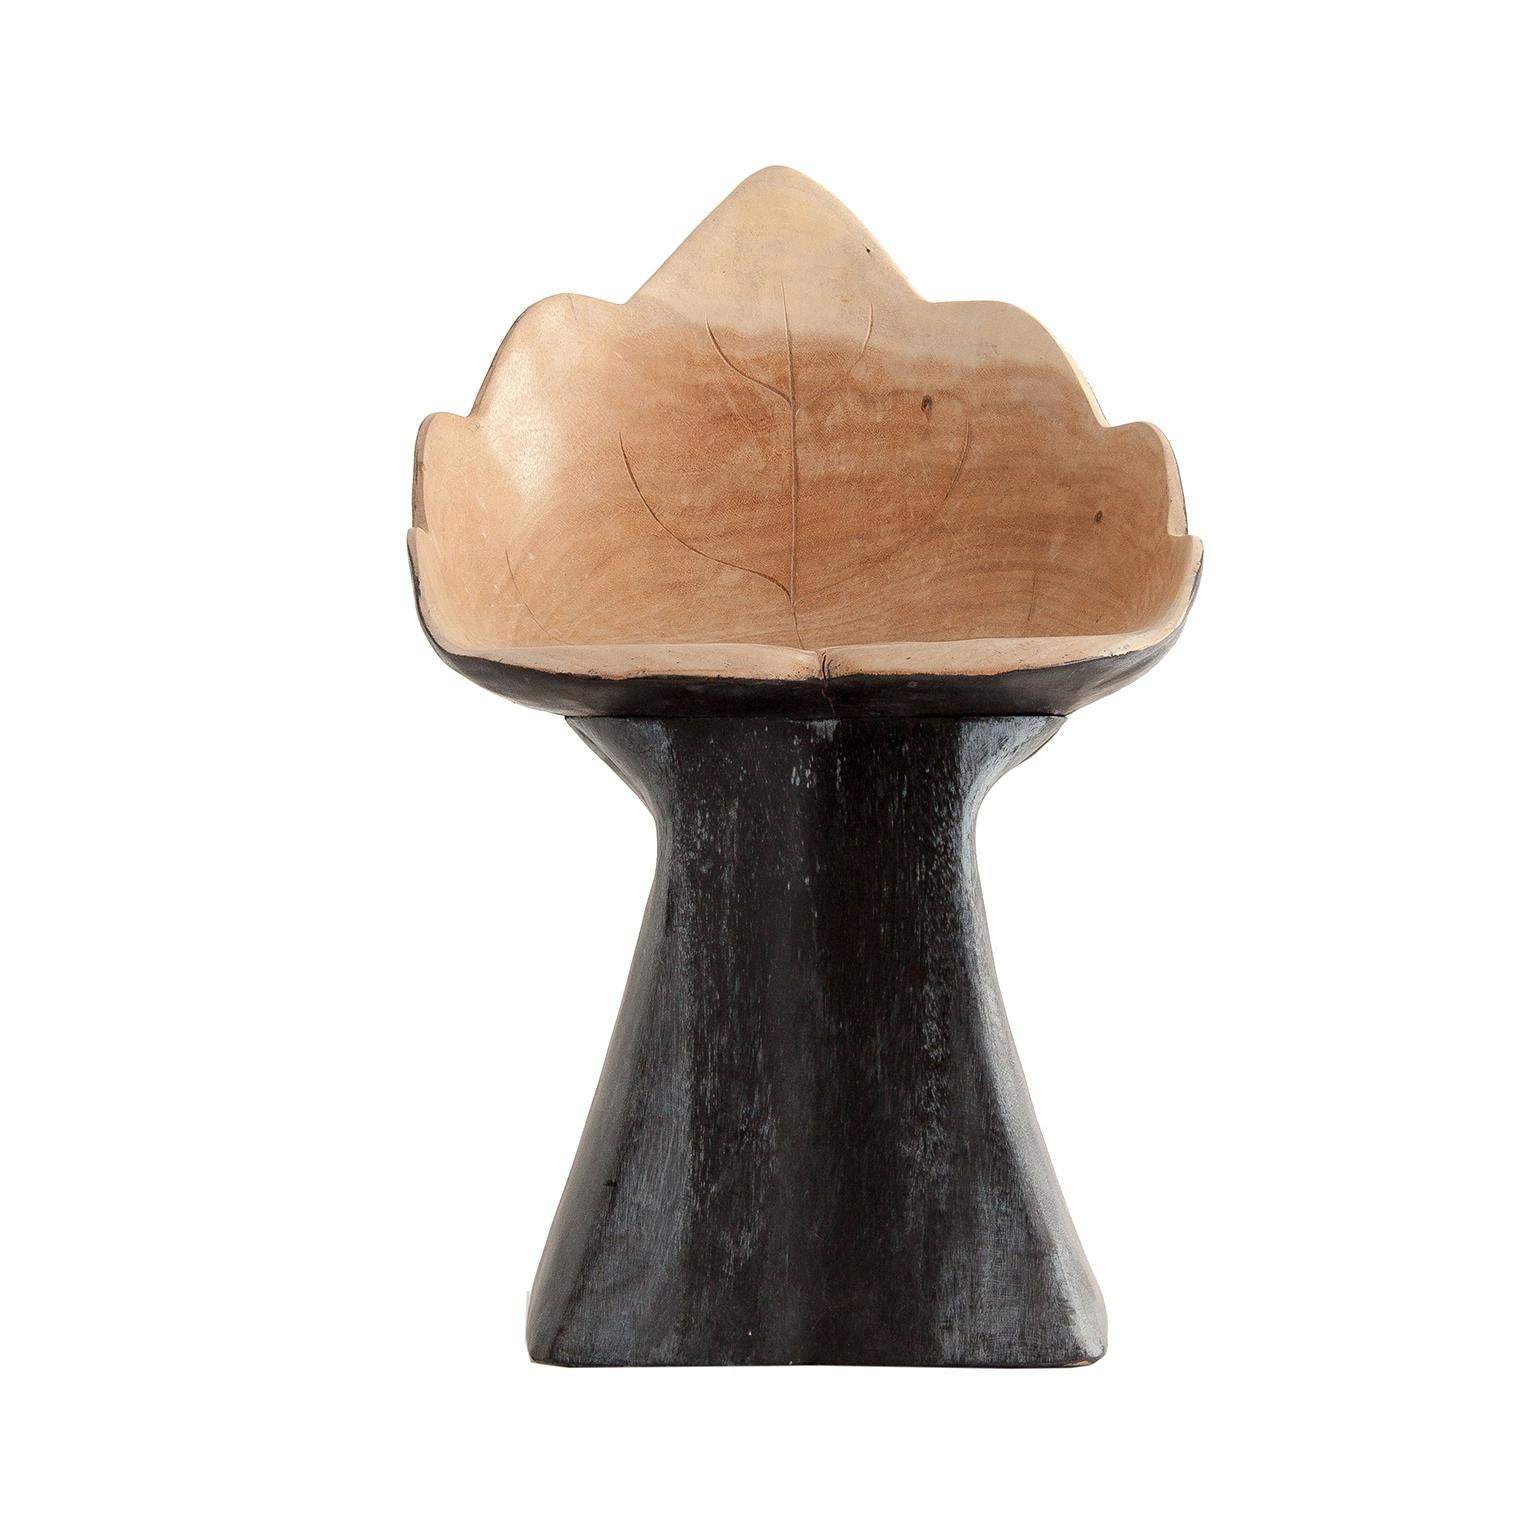 Organic design solid wood armchair leaf shaped.